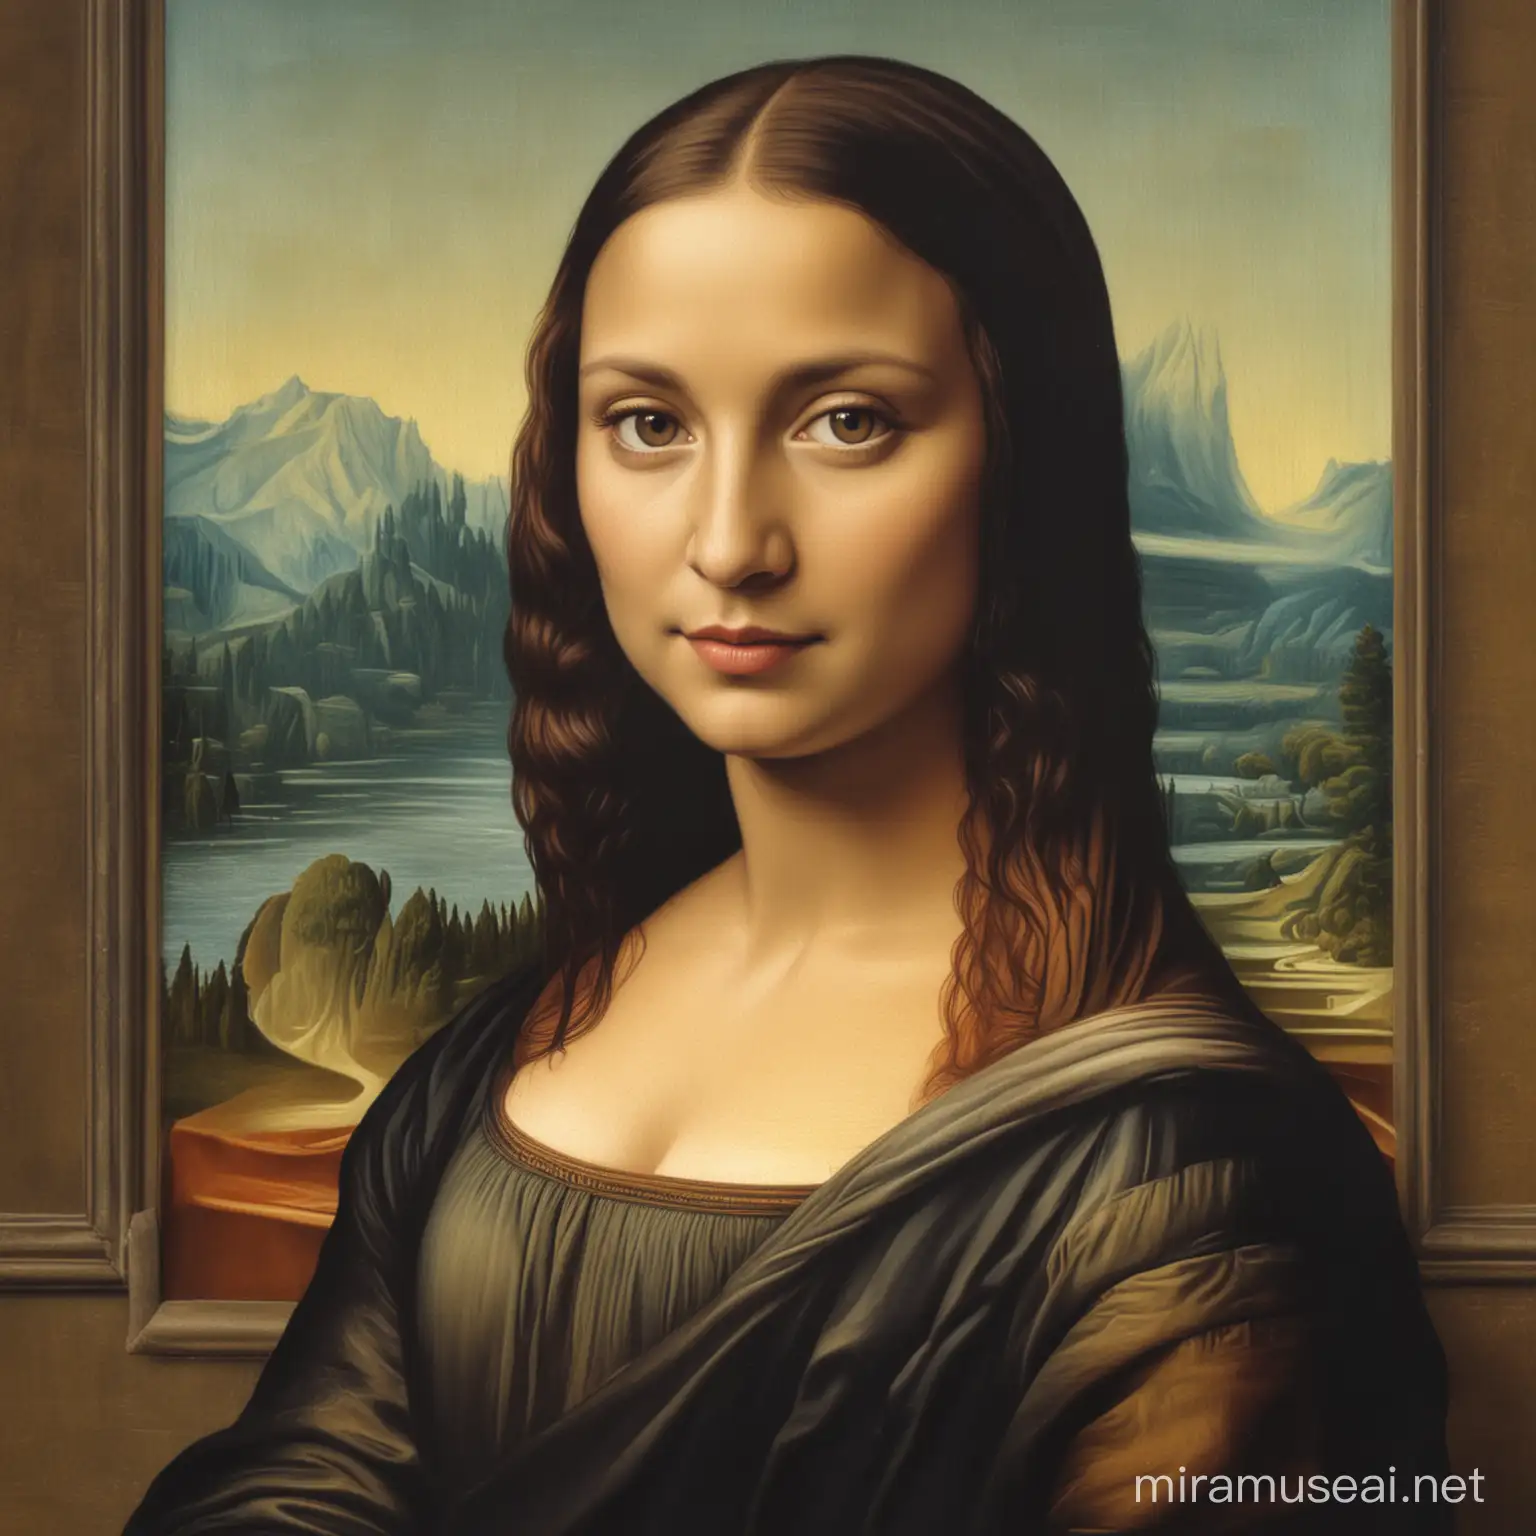 Contemporary Interpretation of the Iconic Mona Lisa Portrait